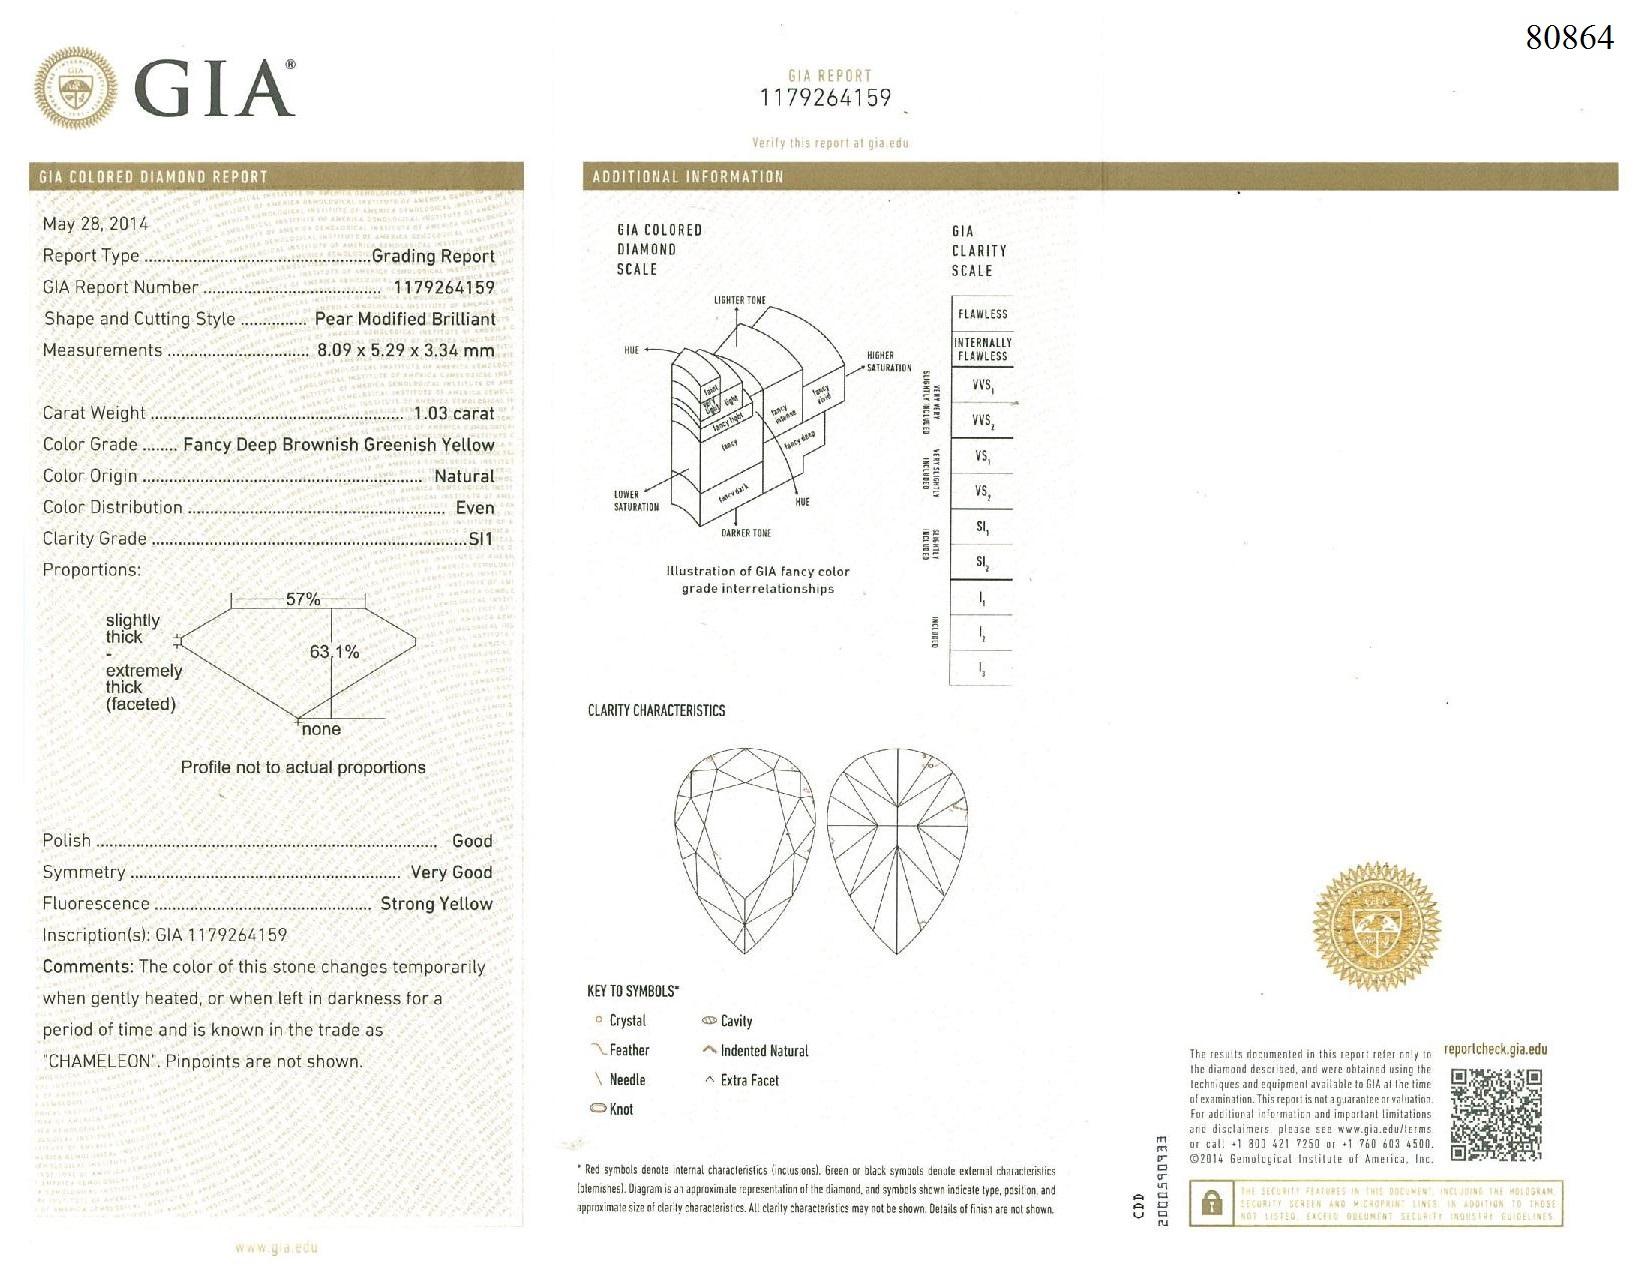 GIA Certified 1.03 Carat Fancy Deep Brownish Greenish Yellow Diamond Ring For Sale 7